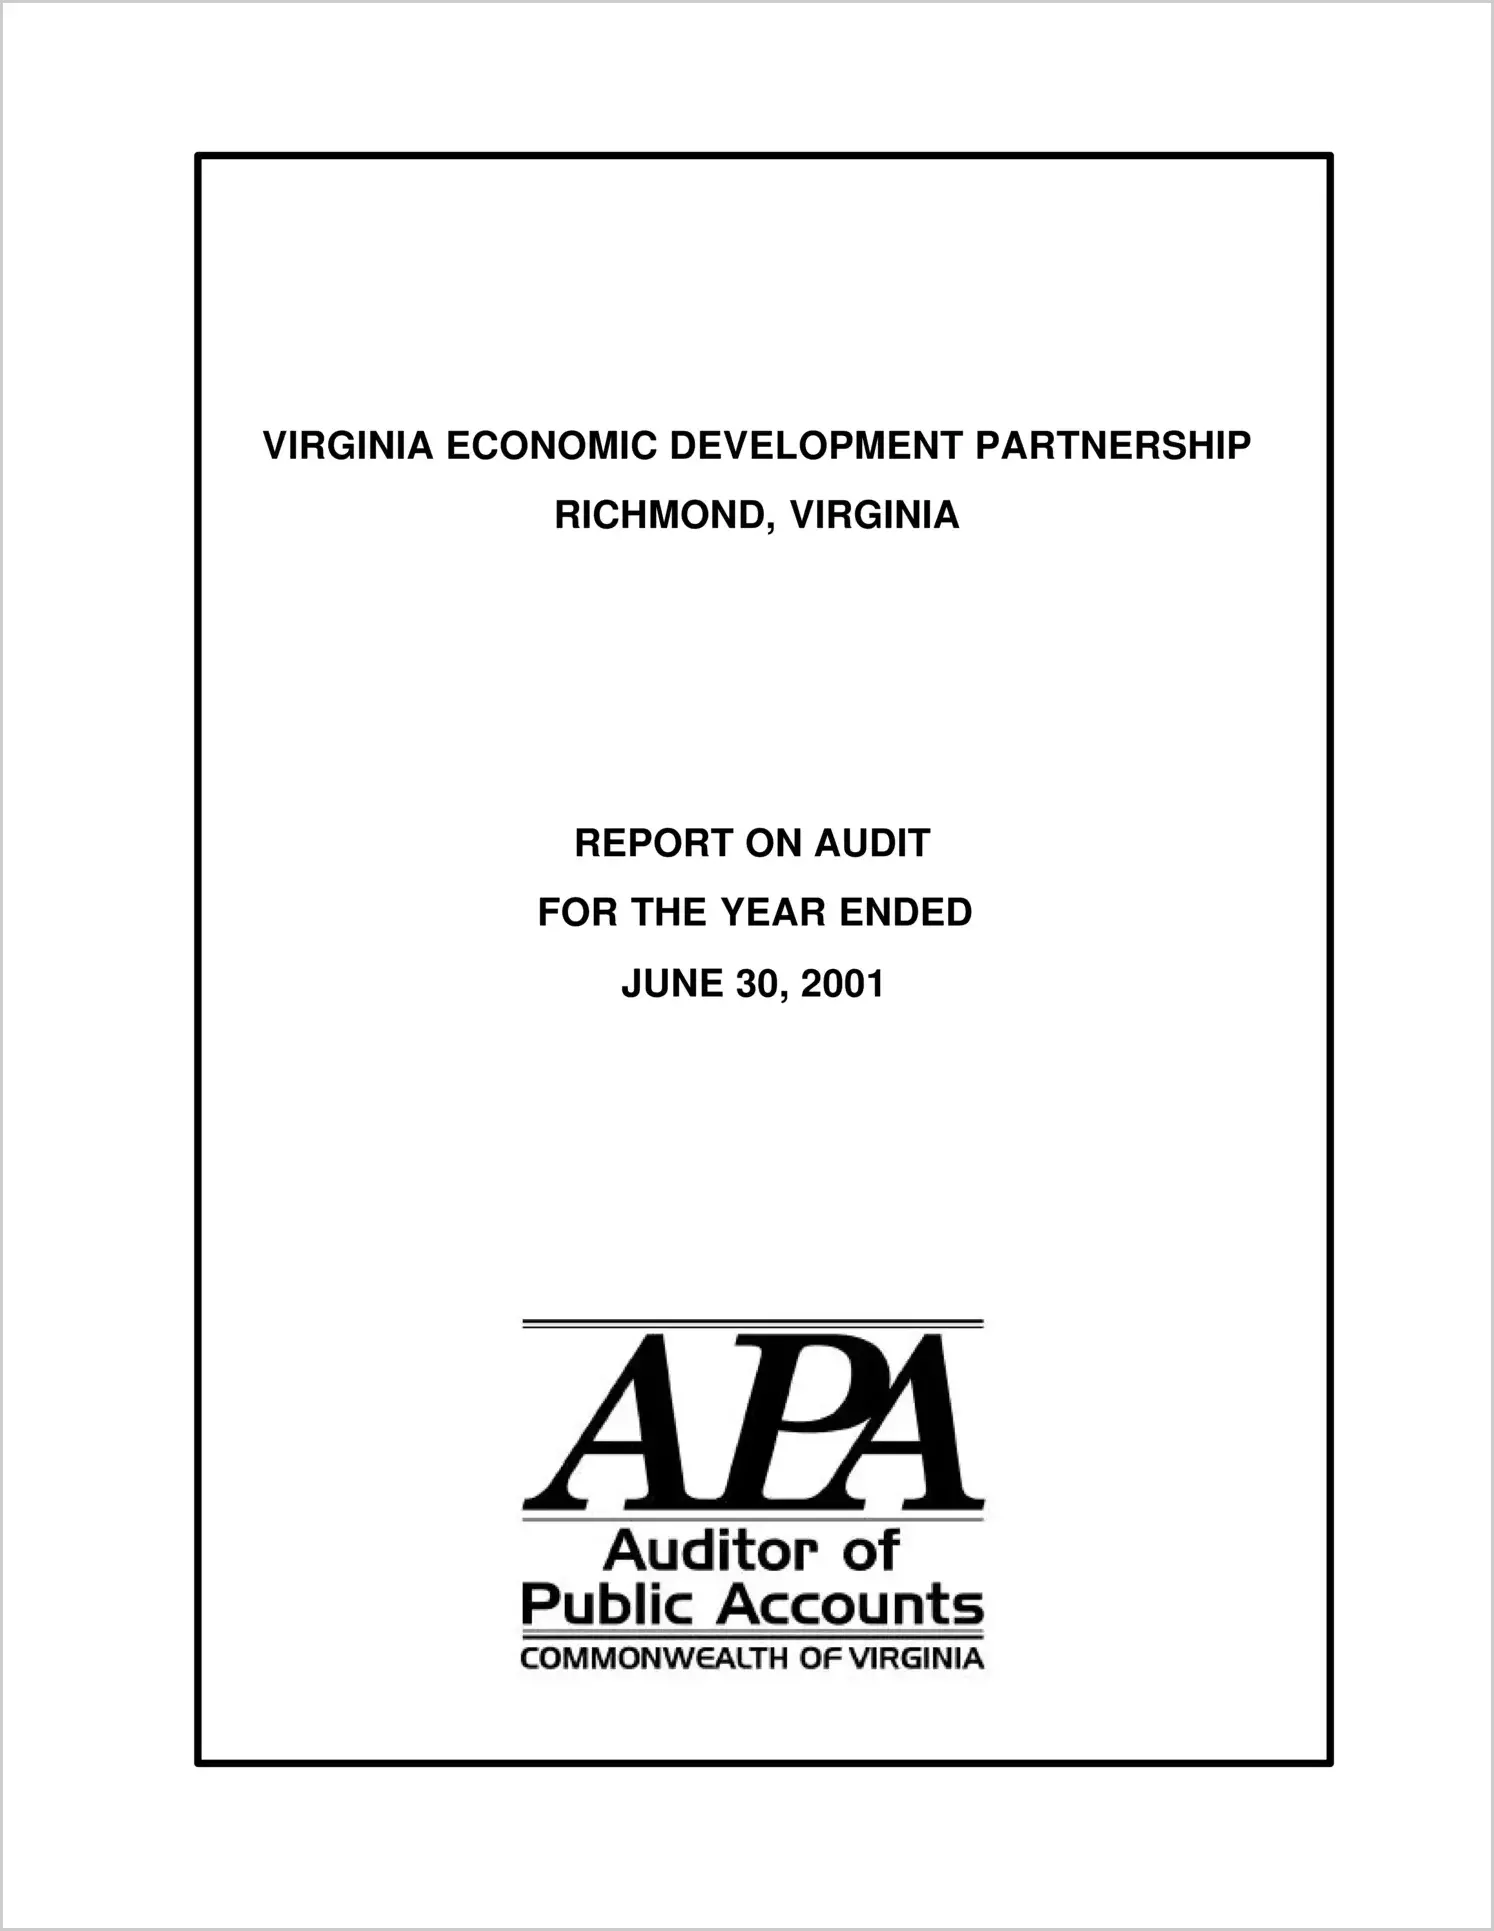 Virginia Economic Development Partnership for the year ended June 30, 2001